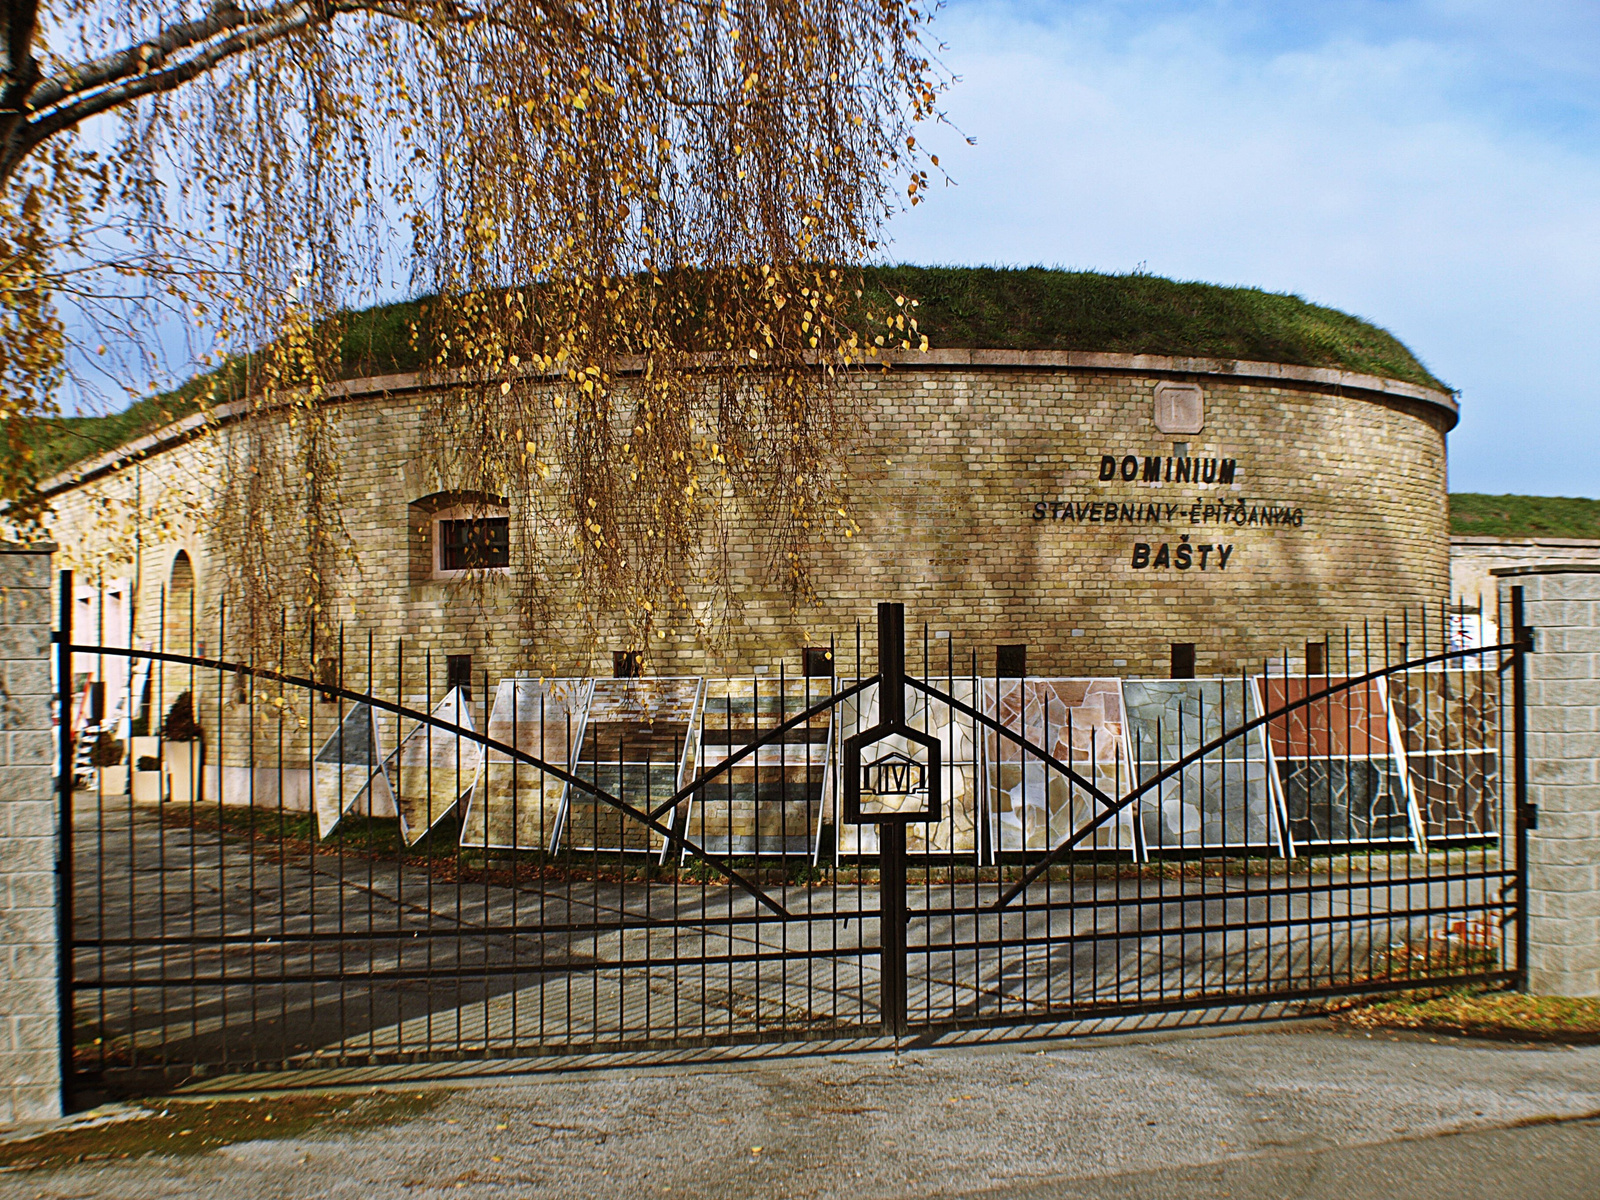 IV. bástya, fortress Komárno